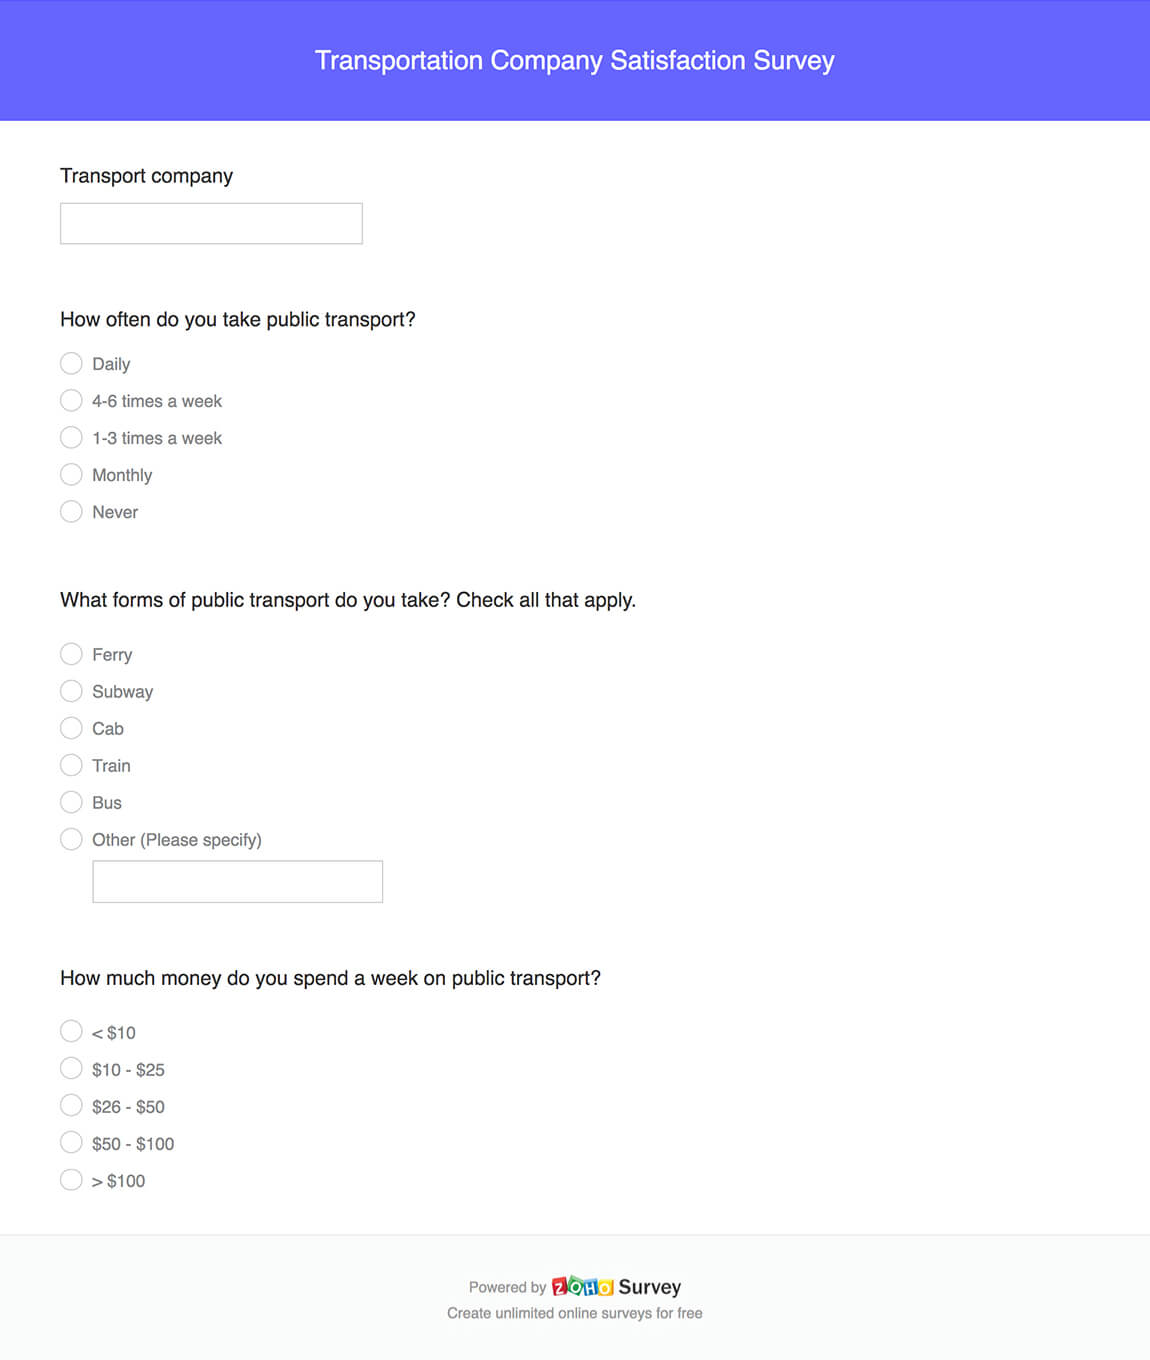 Transportation company satisfaction survey questionnaire template